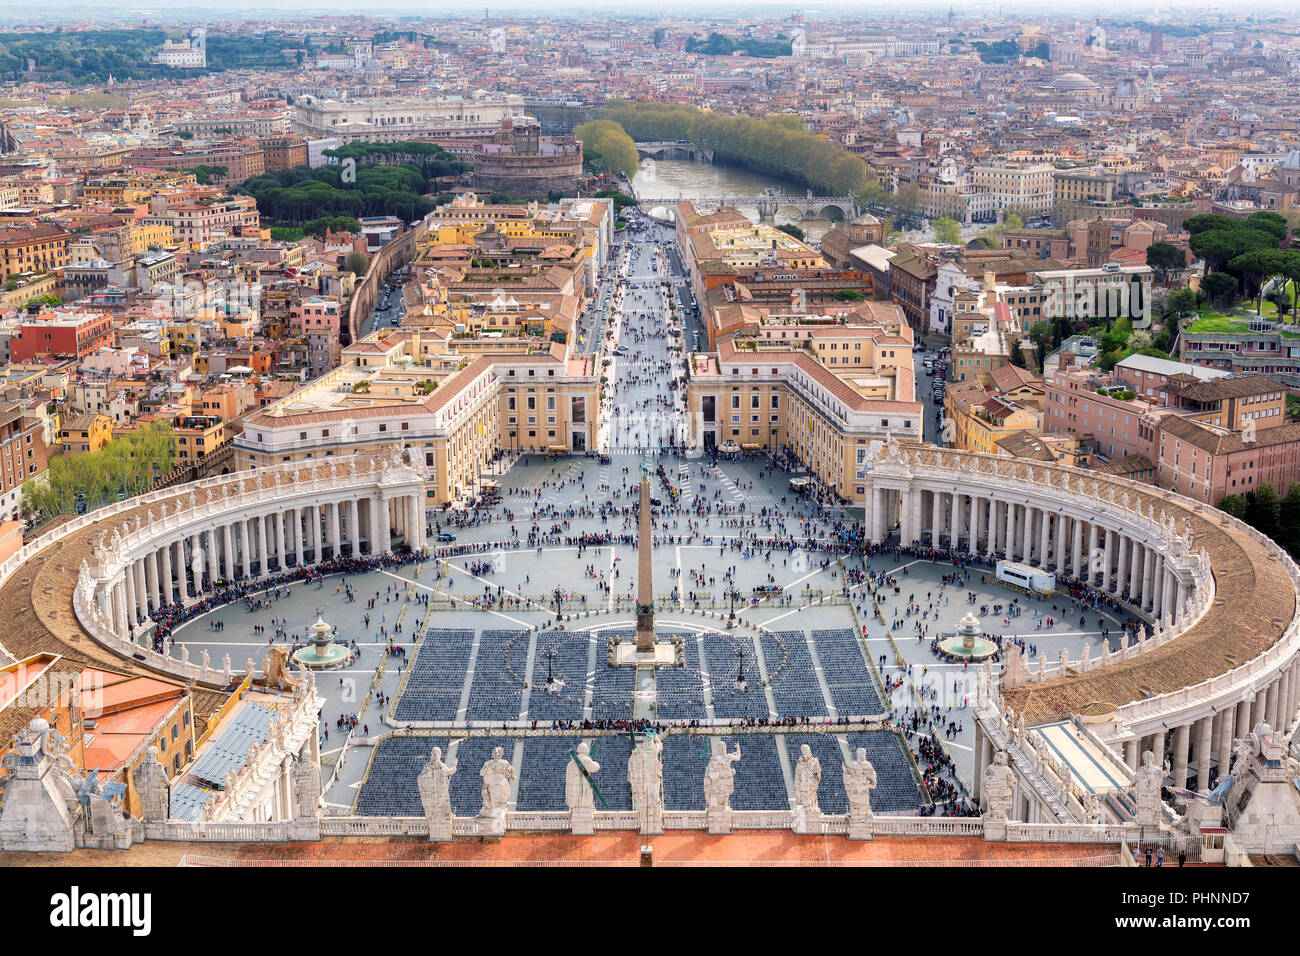 Vista aérea de Roma, Italia. La Plaza de San Pedro en el Vaticano, Roma, Italia. Foto de stock